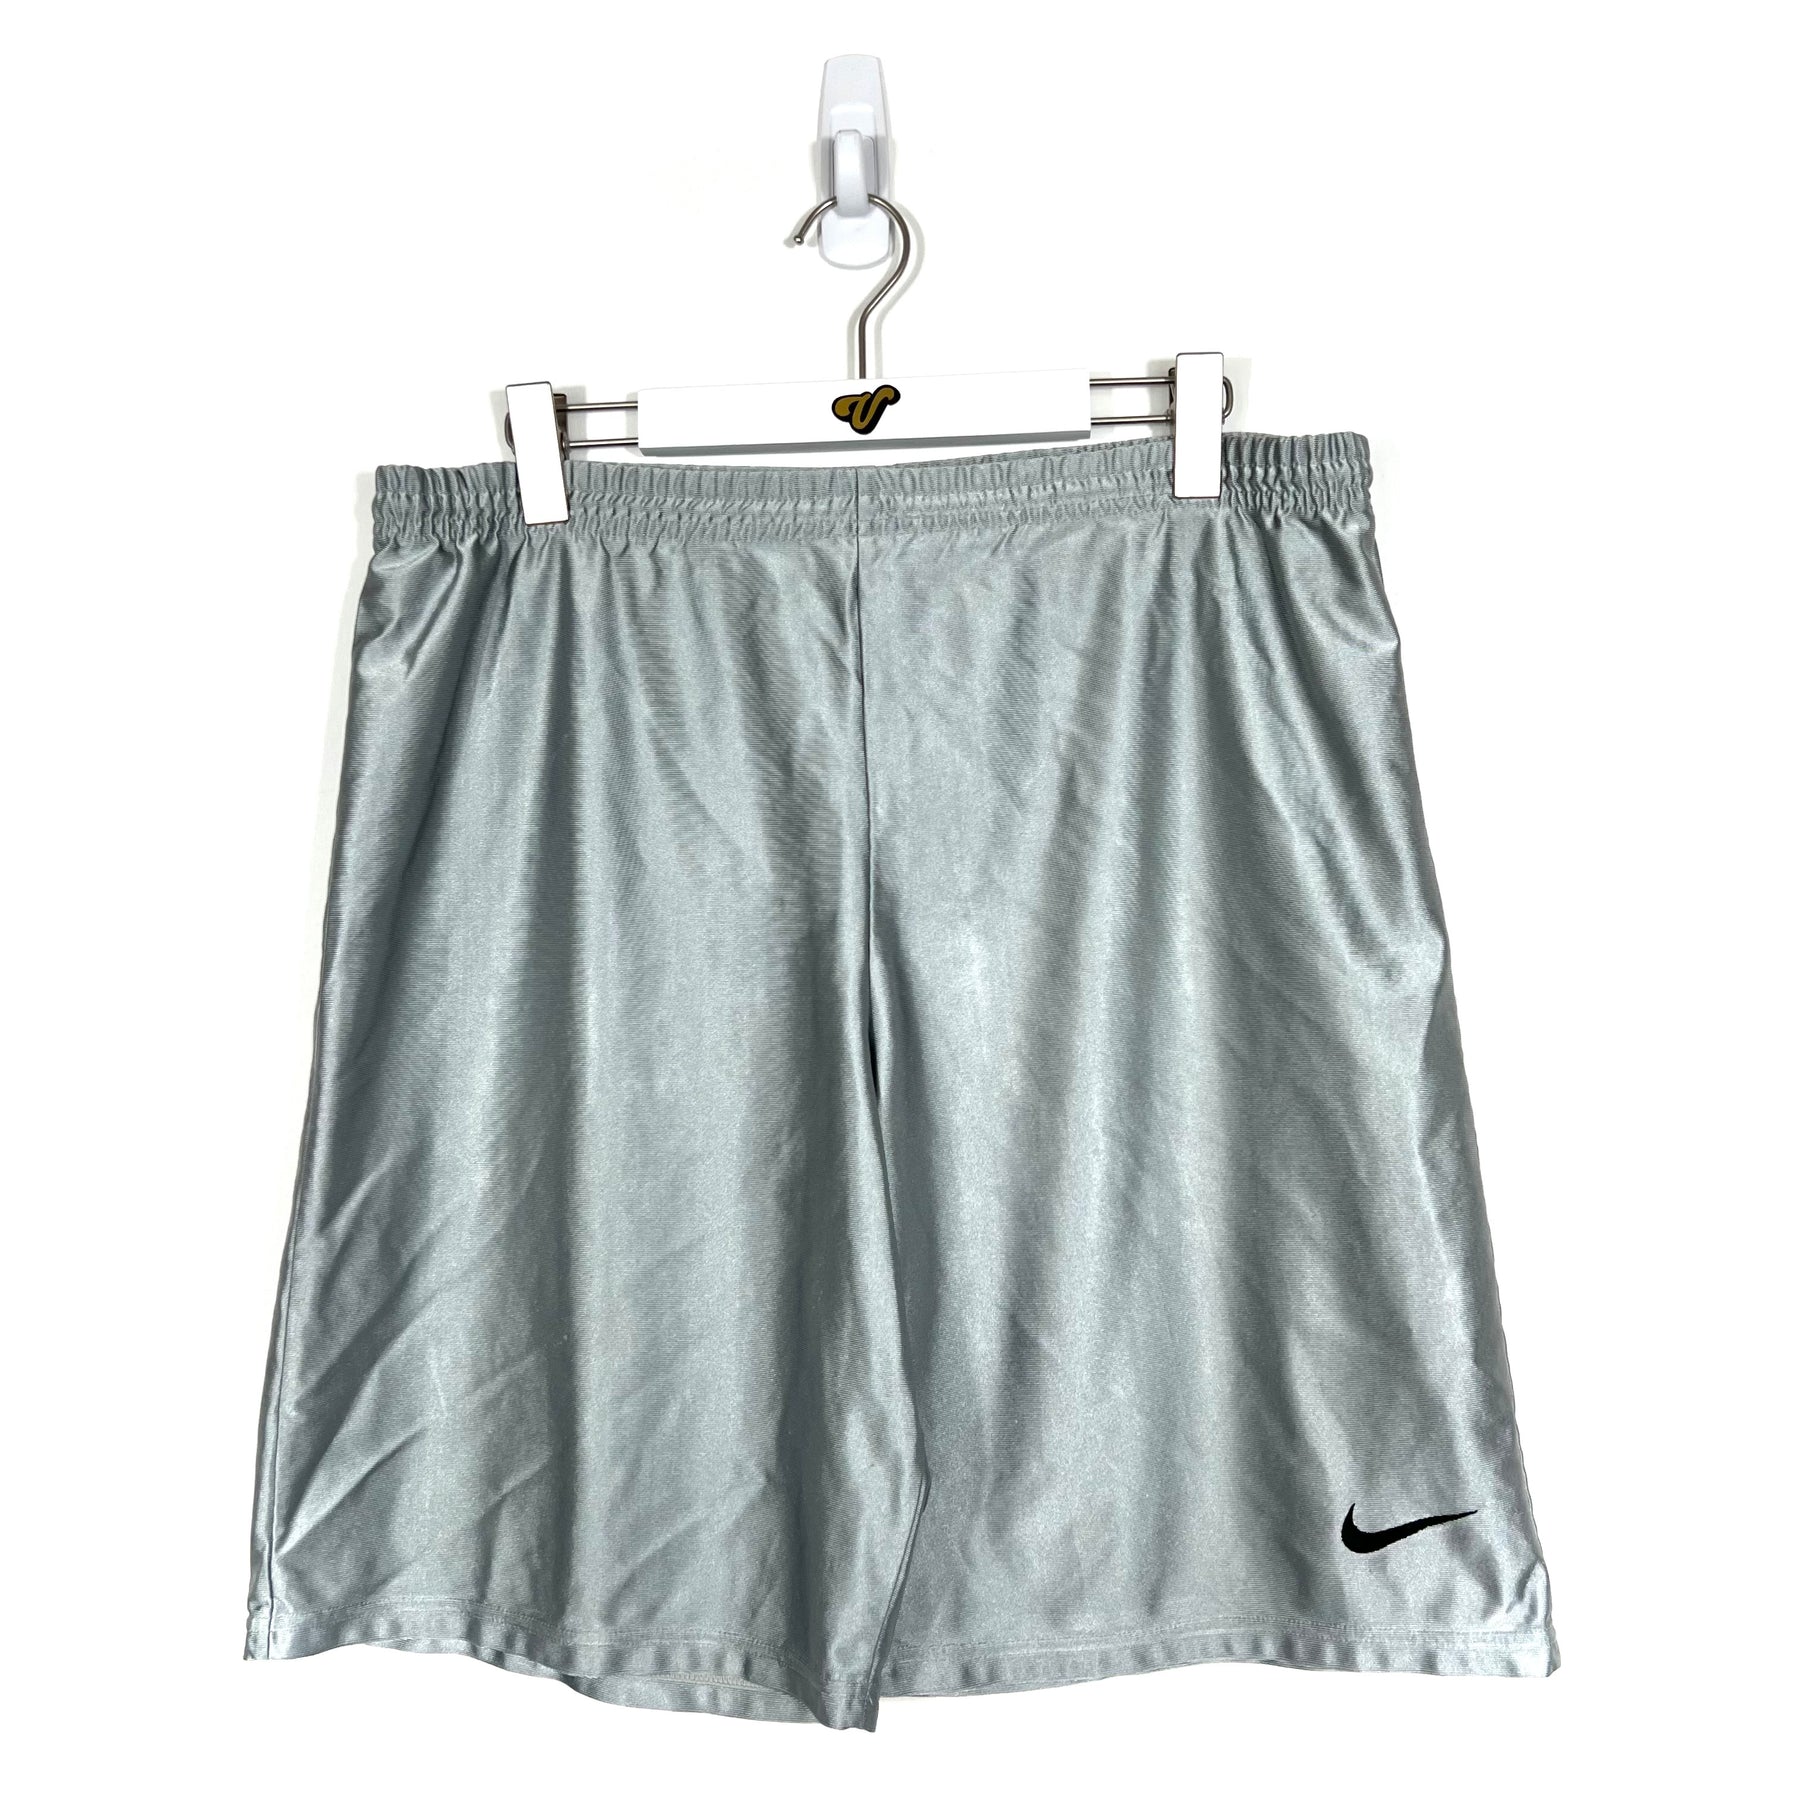 Vintage Nike Shorts - Men's Medium